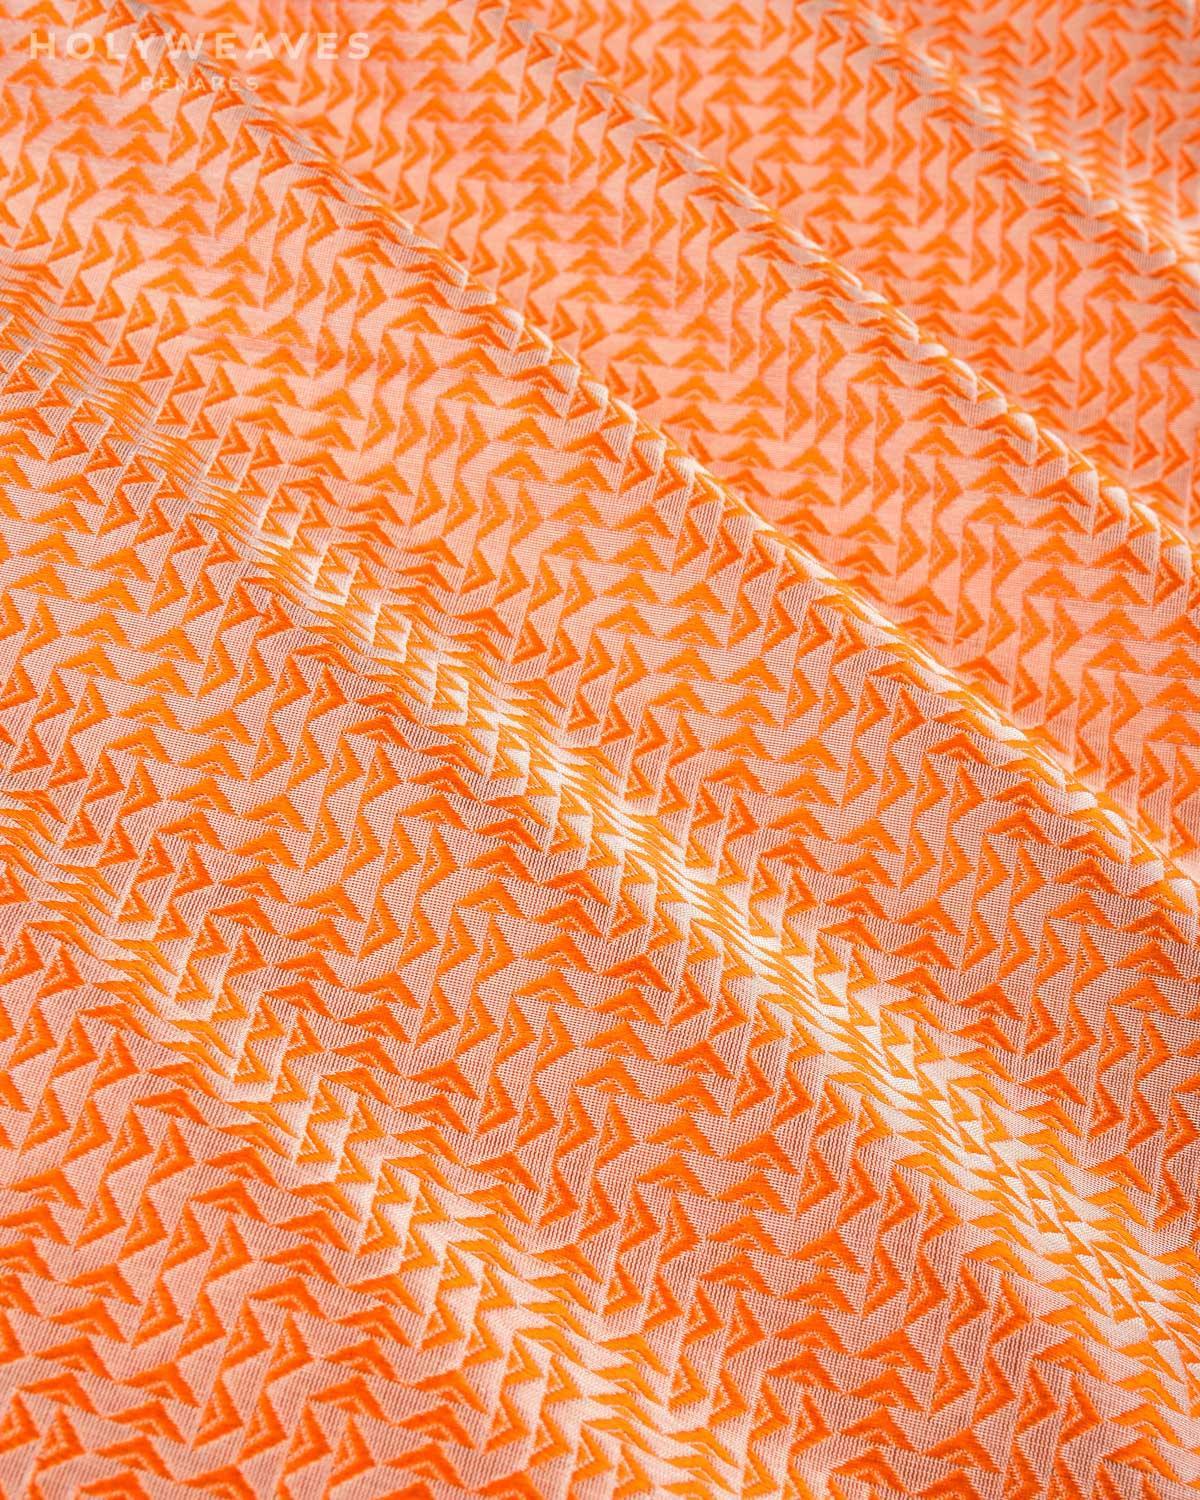 Metalllic Orange Banarasi Arrowhead Tanchoi Handwoven Katan Tissue Fabric - By HolyWeaves, Benares